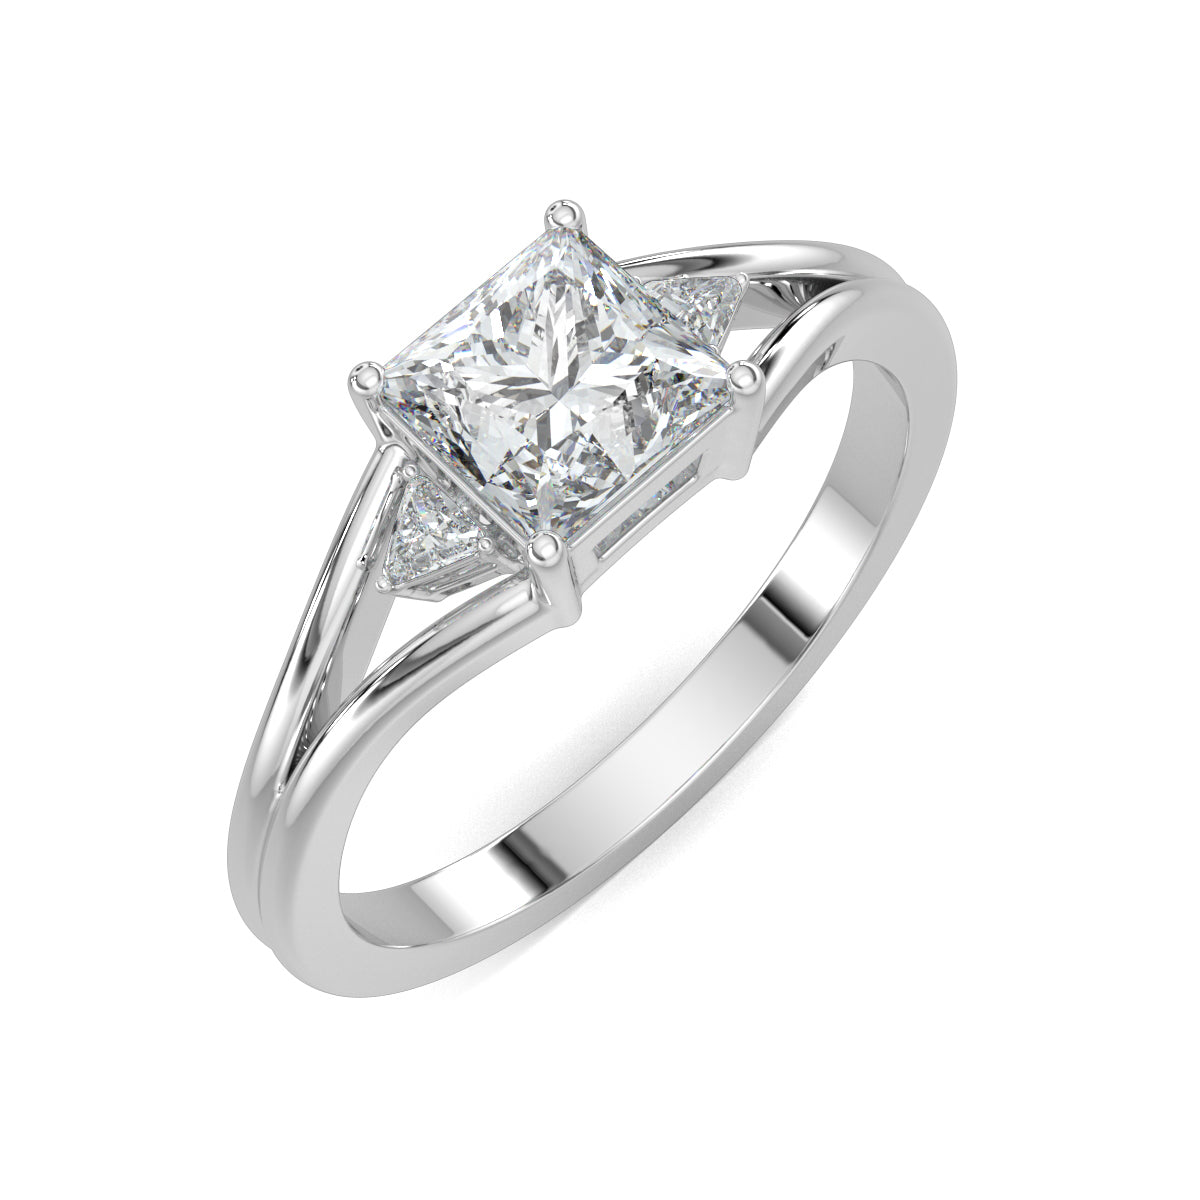 White Gold, Diamond Ring, Enchantress Solitaire Diamond Ring, Natural Diamonds, Lab-Grown Diamonds, Princess Cut Diamond, Trillion Diamonds, Split Shank Band, Elegant Diamond Ring